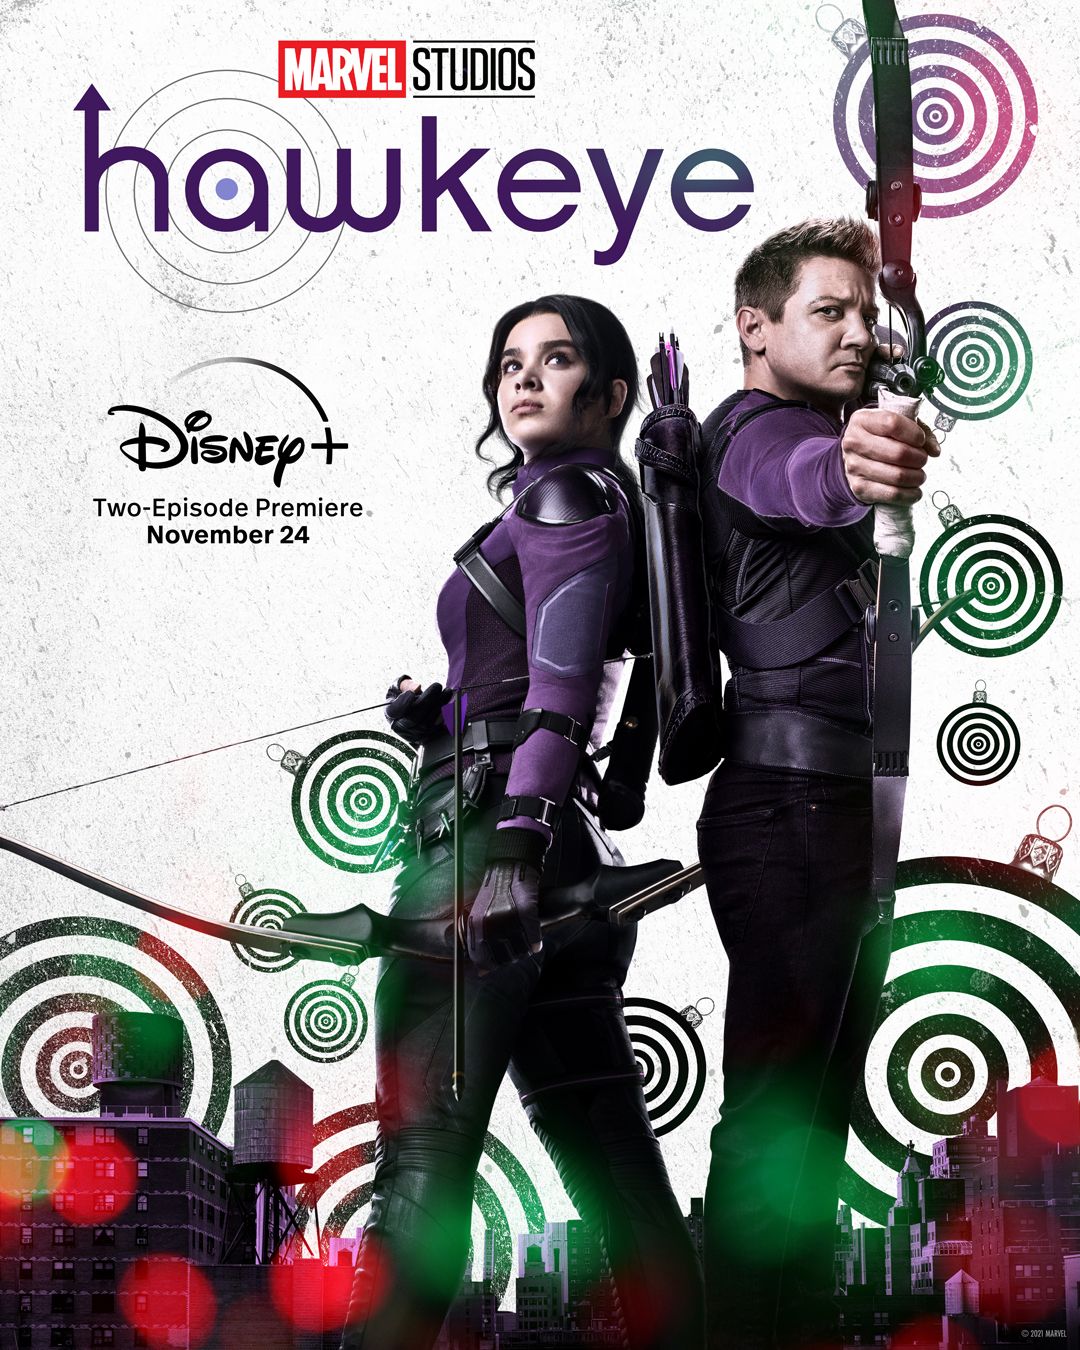 Hawkeye Season 1 (2021) Episode 6 Hindi Dubbed Marvel TV Series download full movie